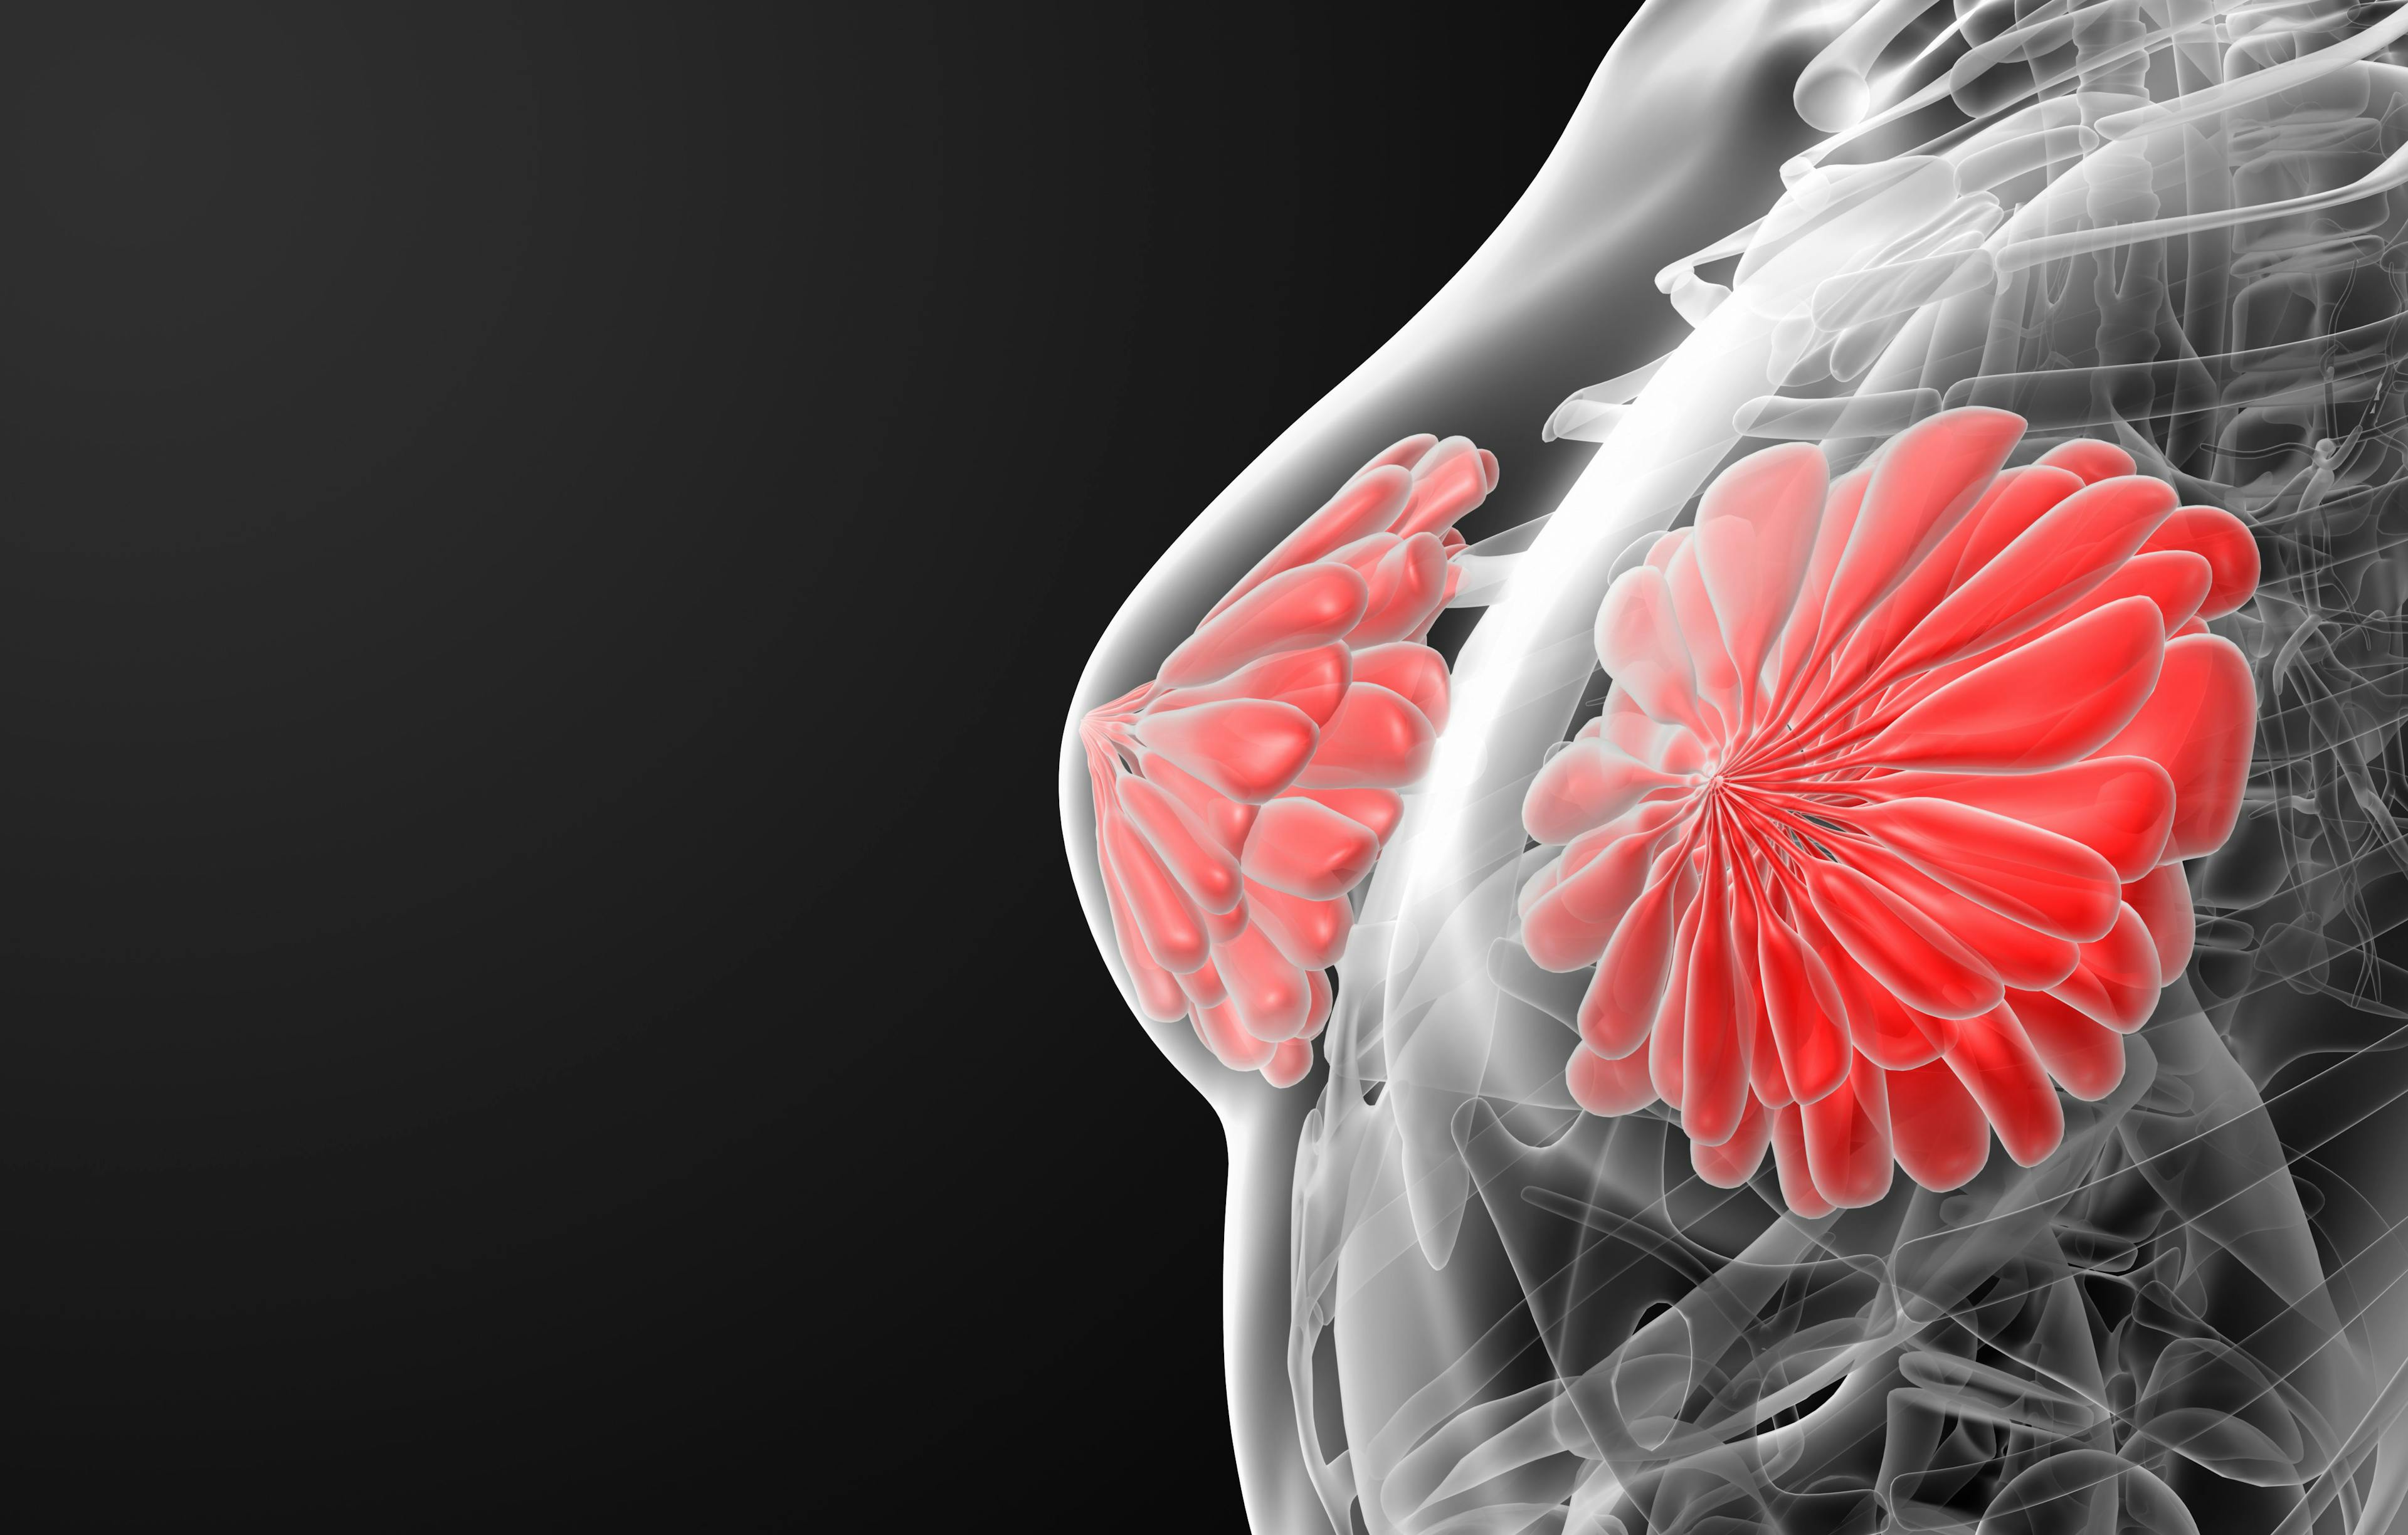 Illustration of human breast tissue